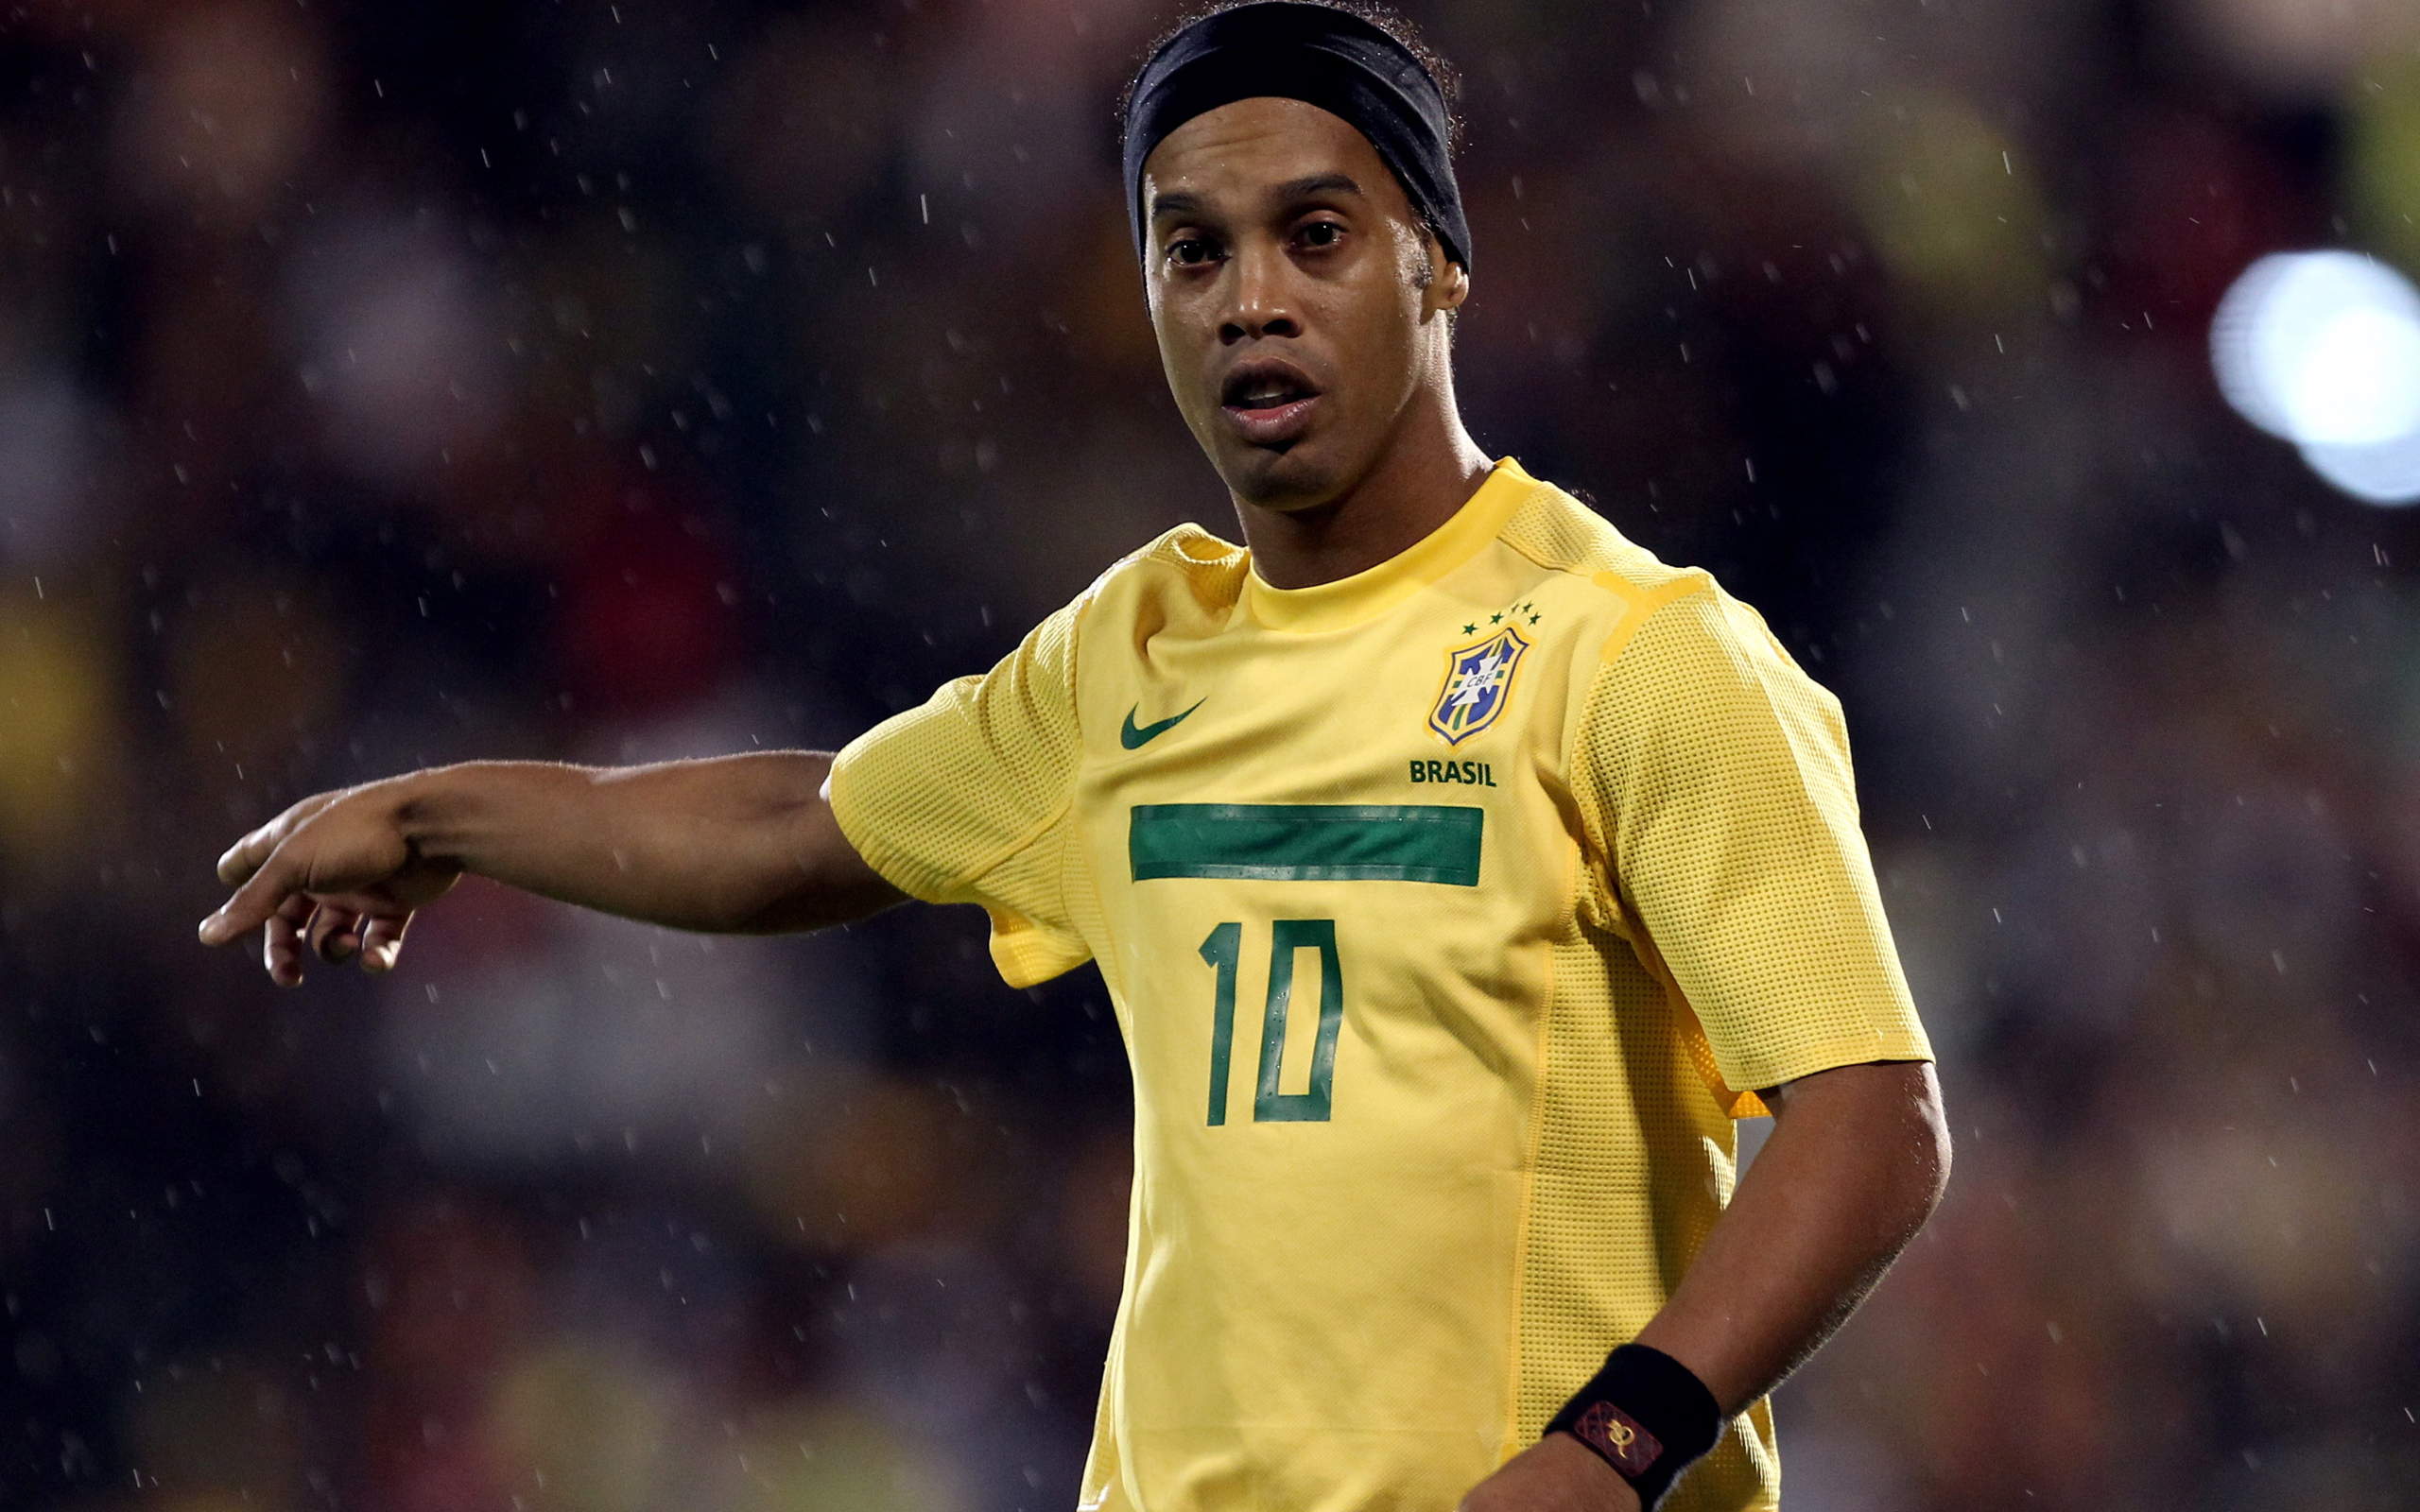 The player of Atletico Mineiro Ronaldinho in brazil's t shirt